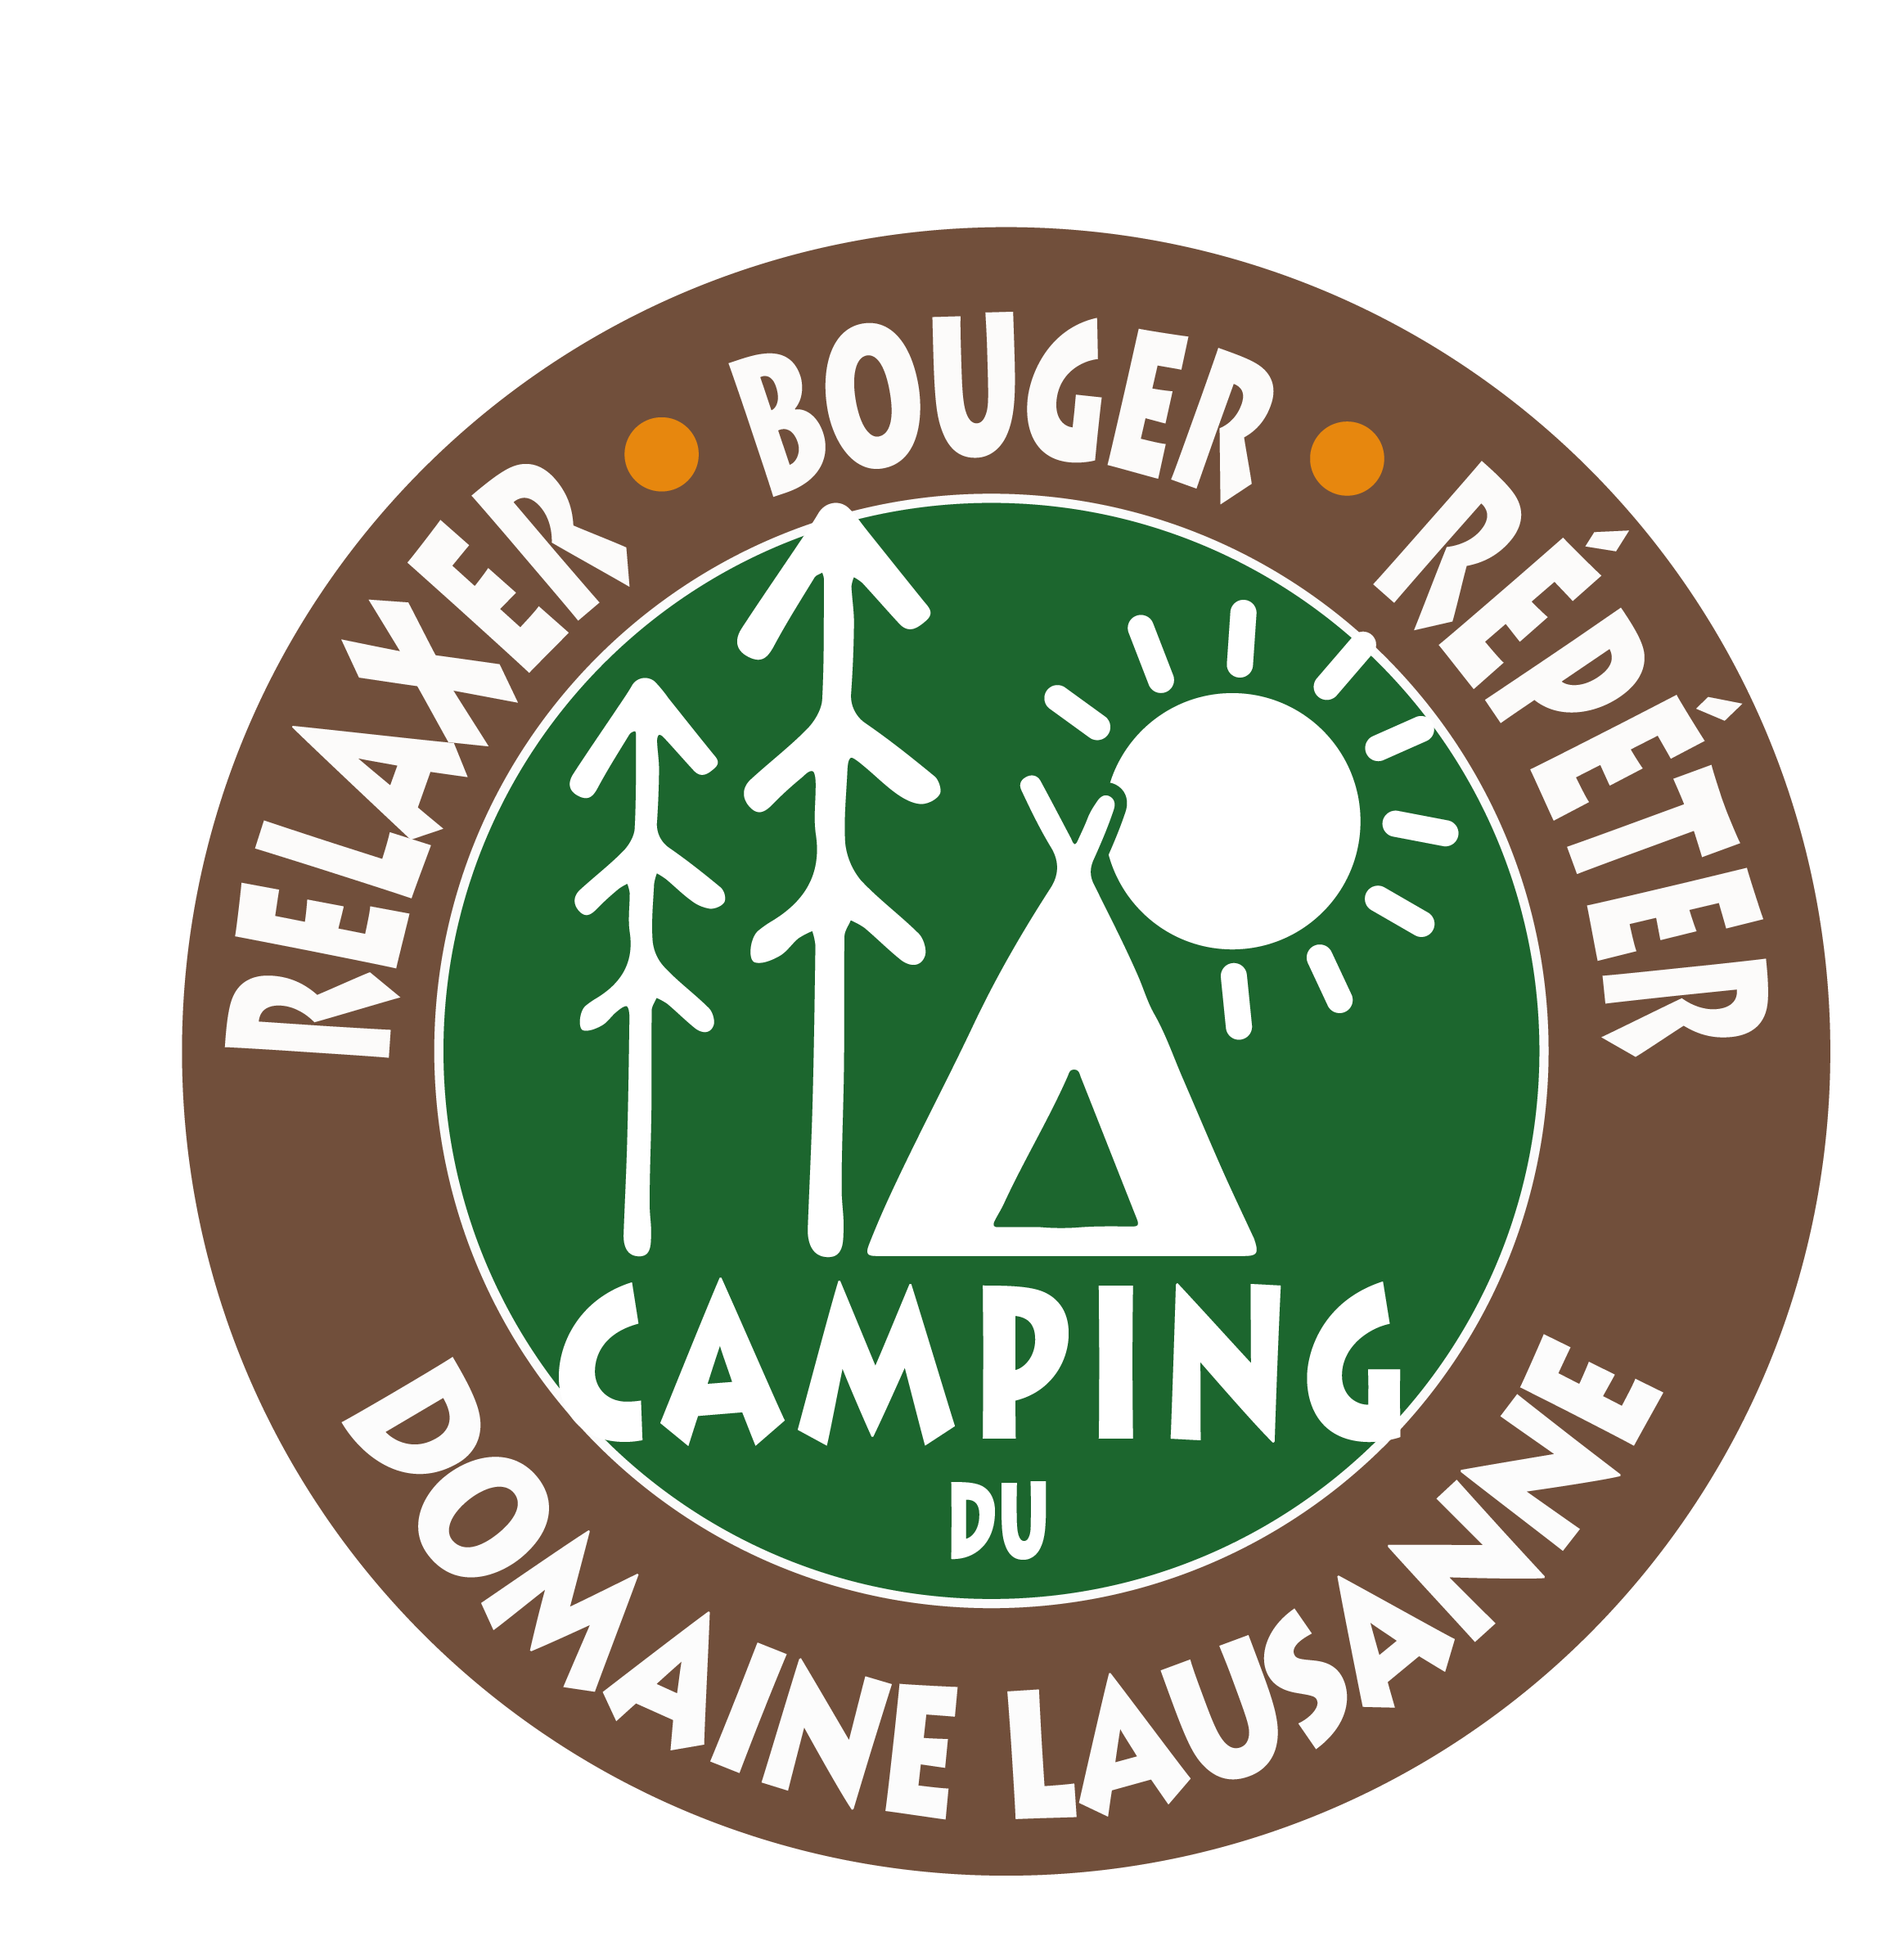 Camping club. Кемпинг логотип. Кемпинг лого. Логотип кемпинг Европа Азия. Логотип кемпинг вид.